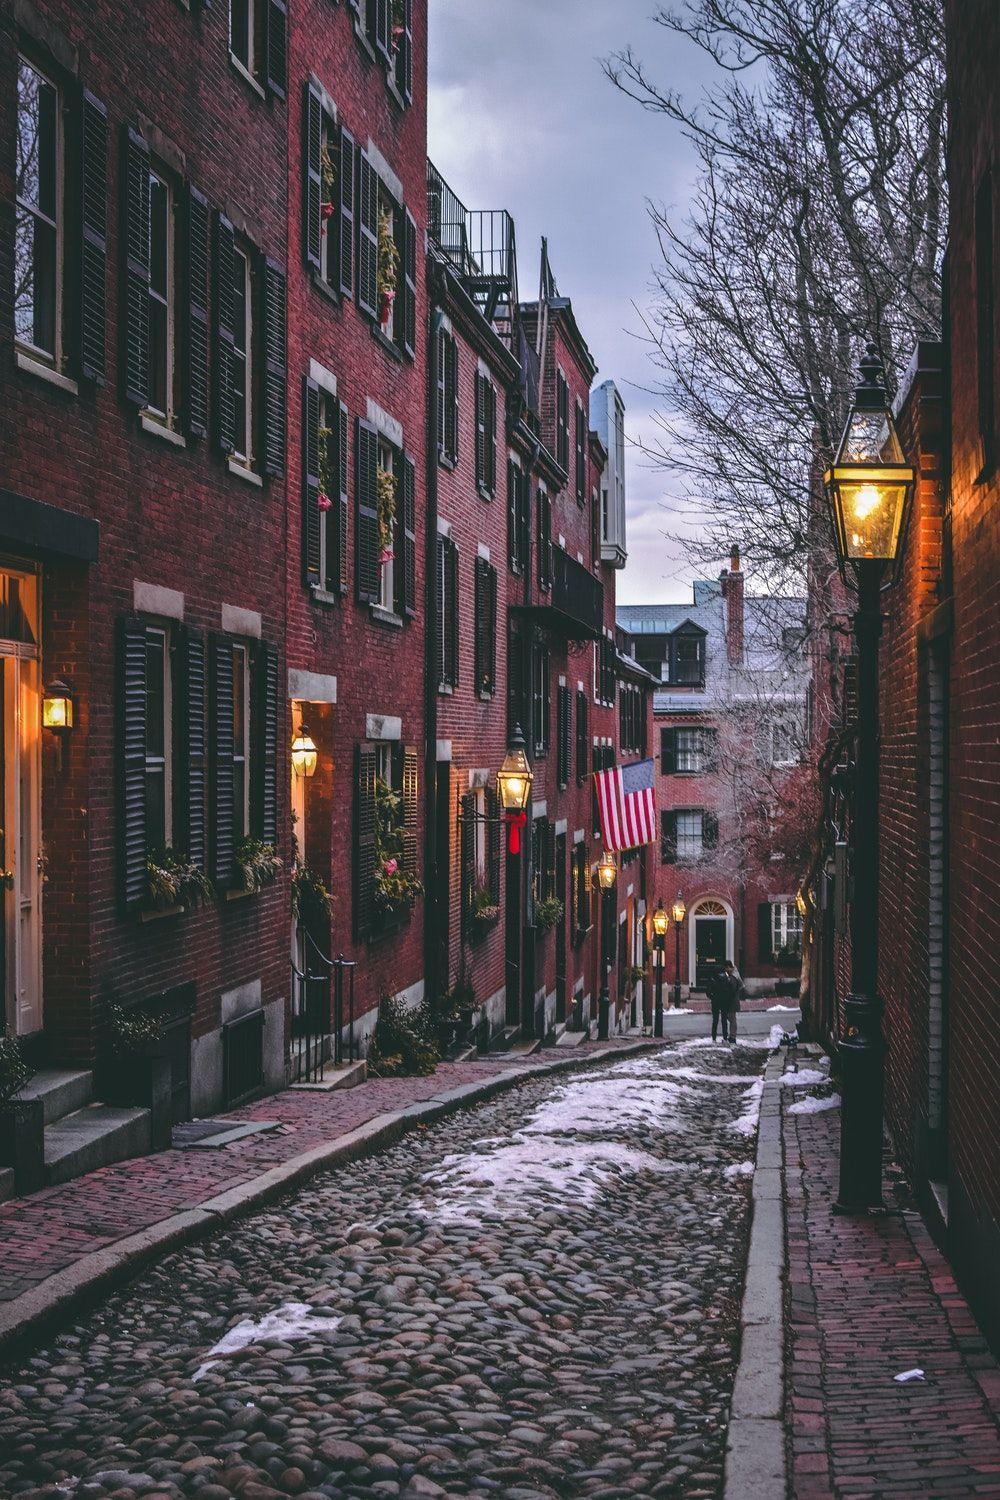 Boston Picture. Download Free Image